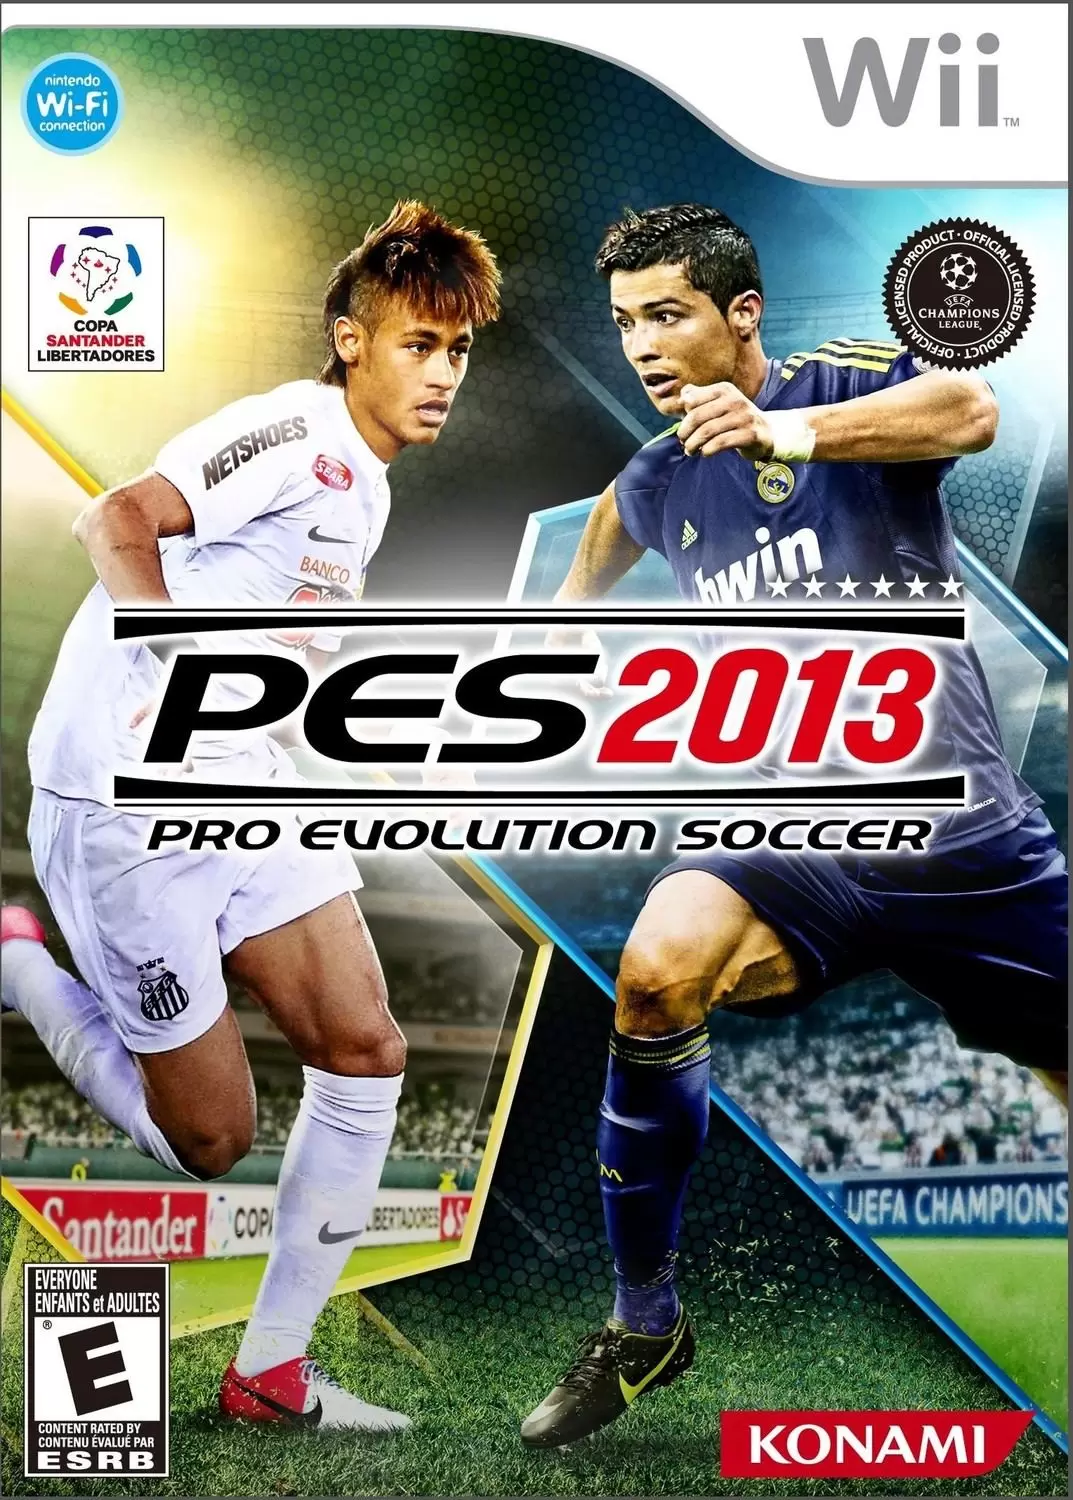 Nintendo Wii Games - Pro Evolution Soccer 2013